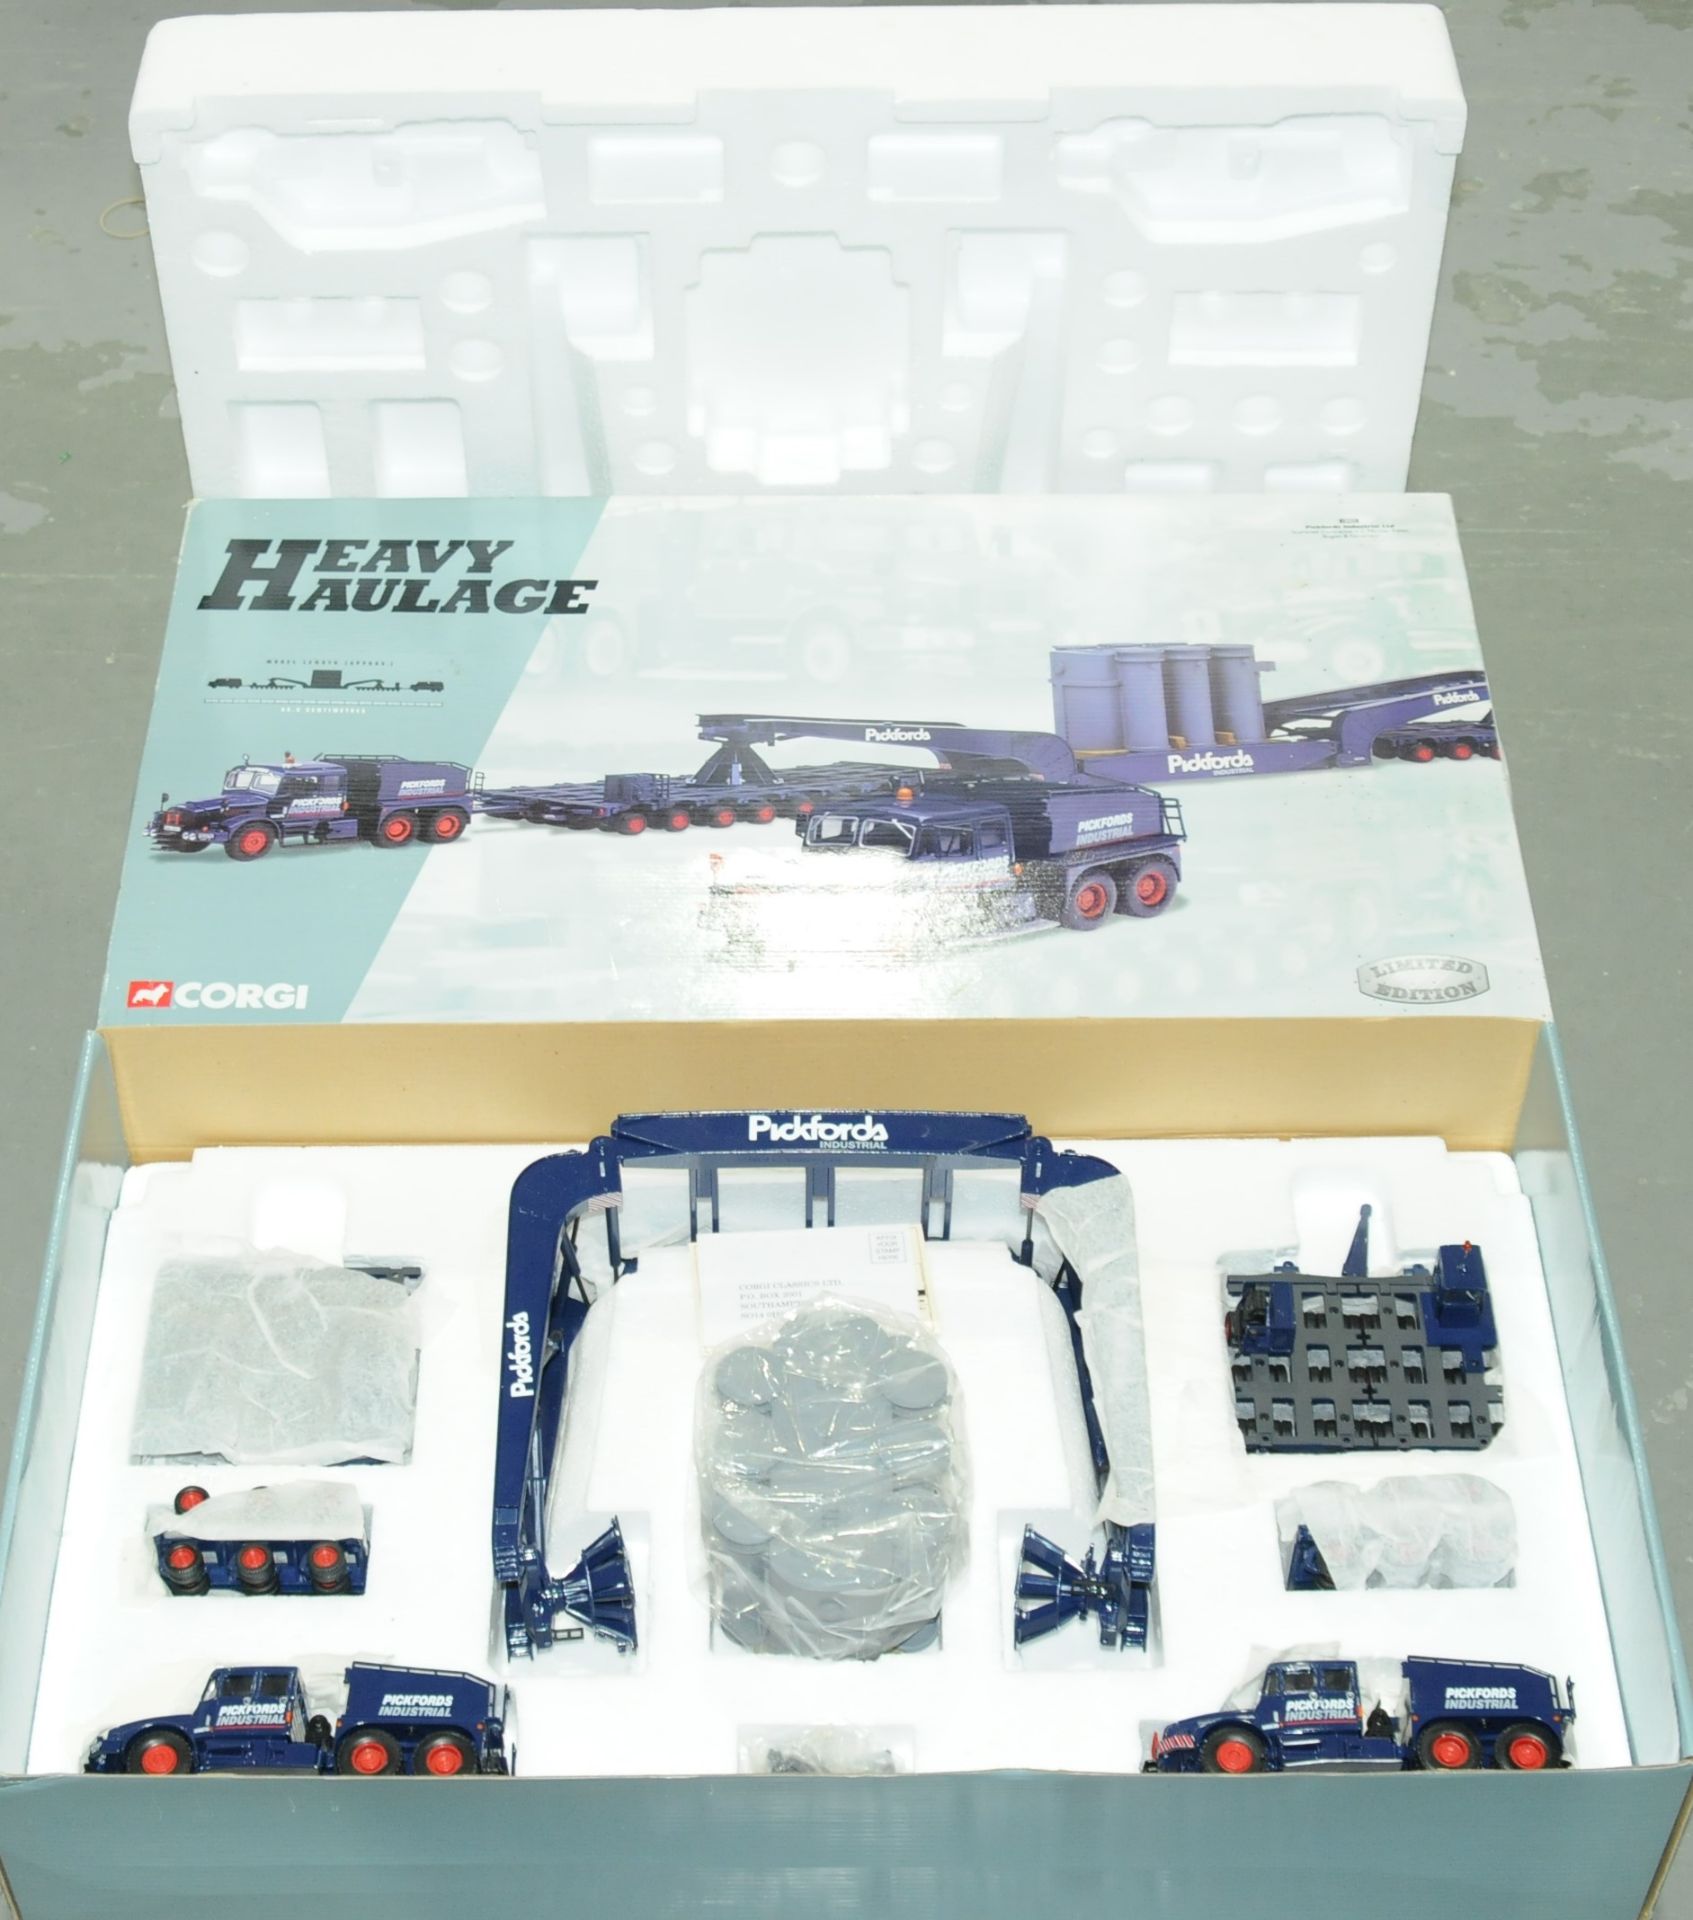 Corgi (Heavy Haulage) a boxed 18005 "Pickford's Industrial Ltd" set